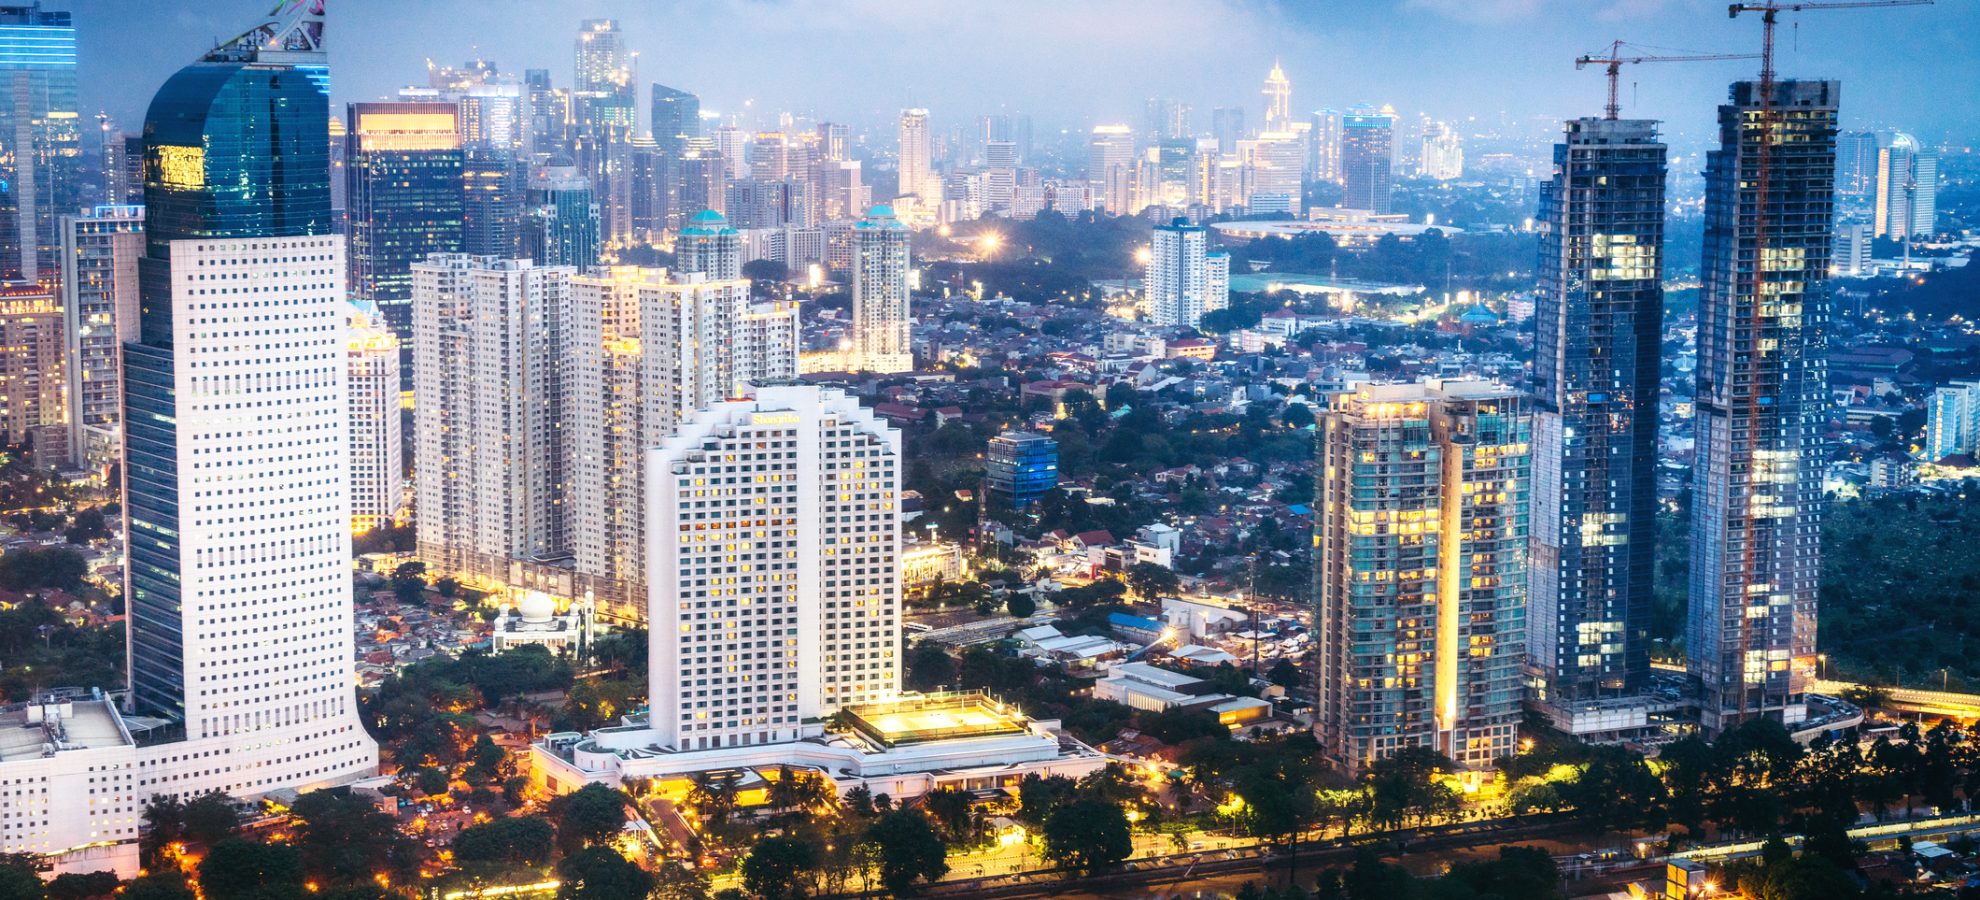 Jakarta - helikopter view